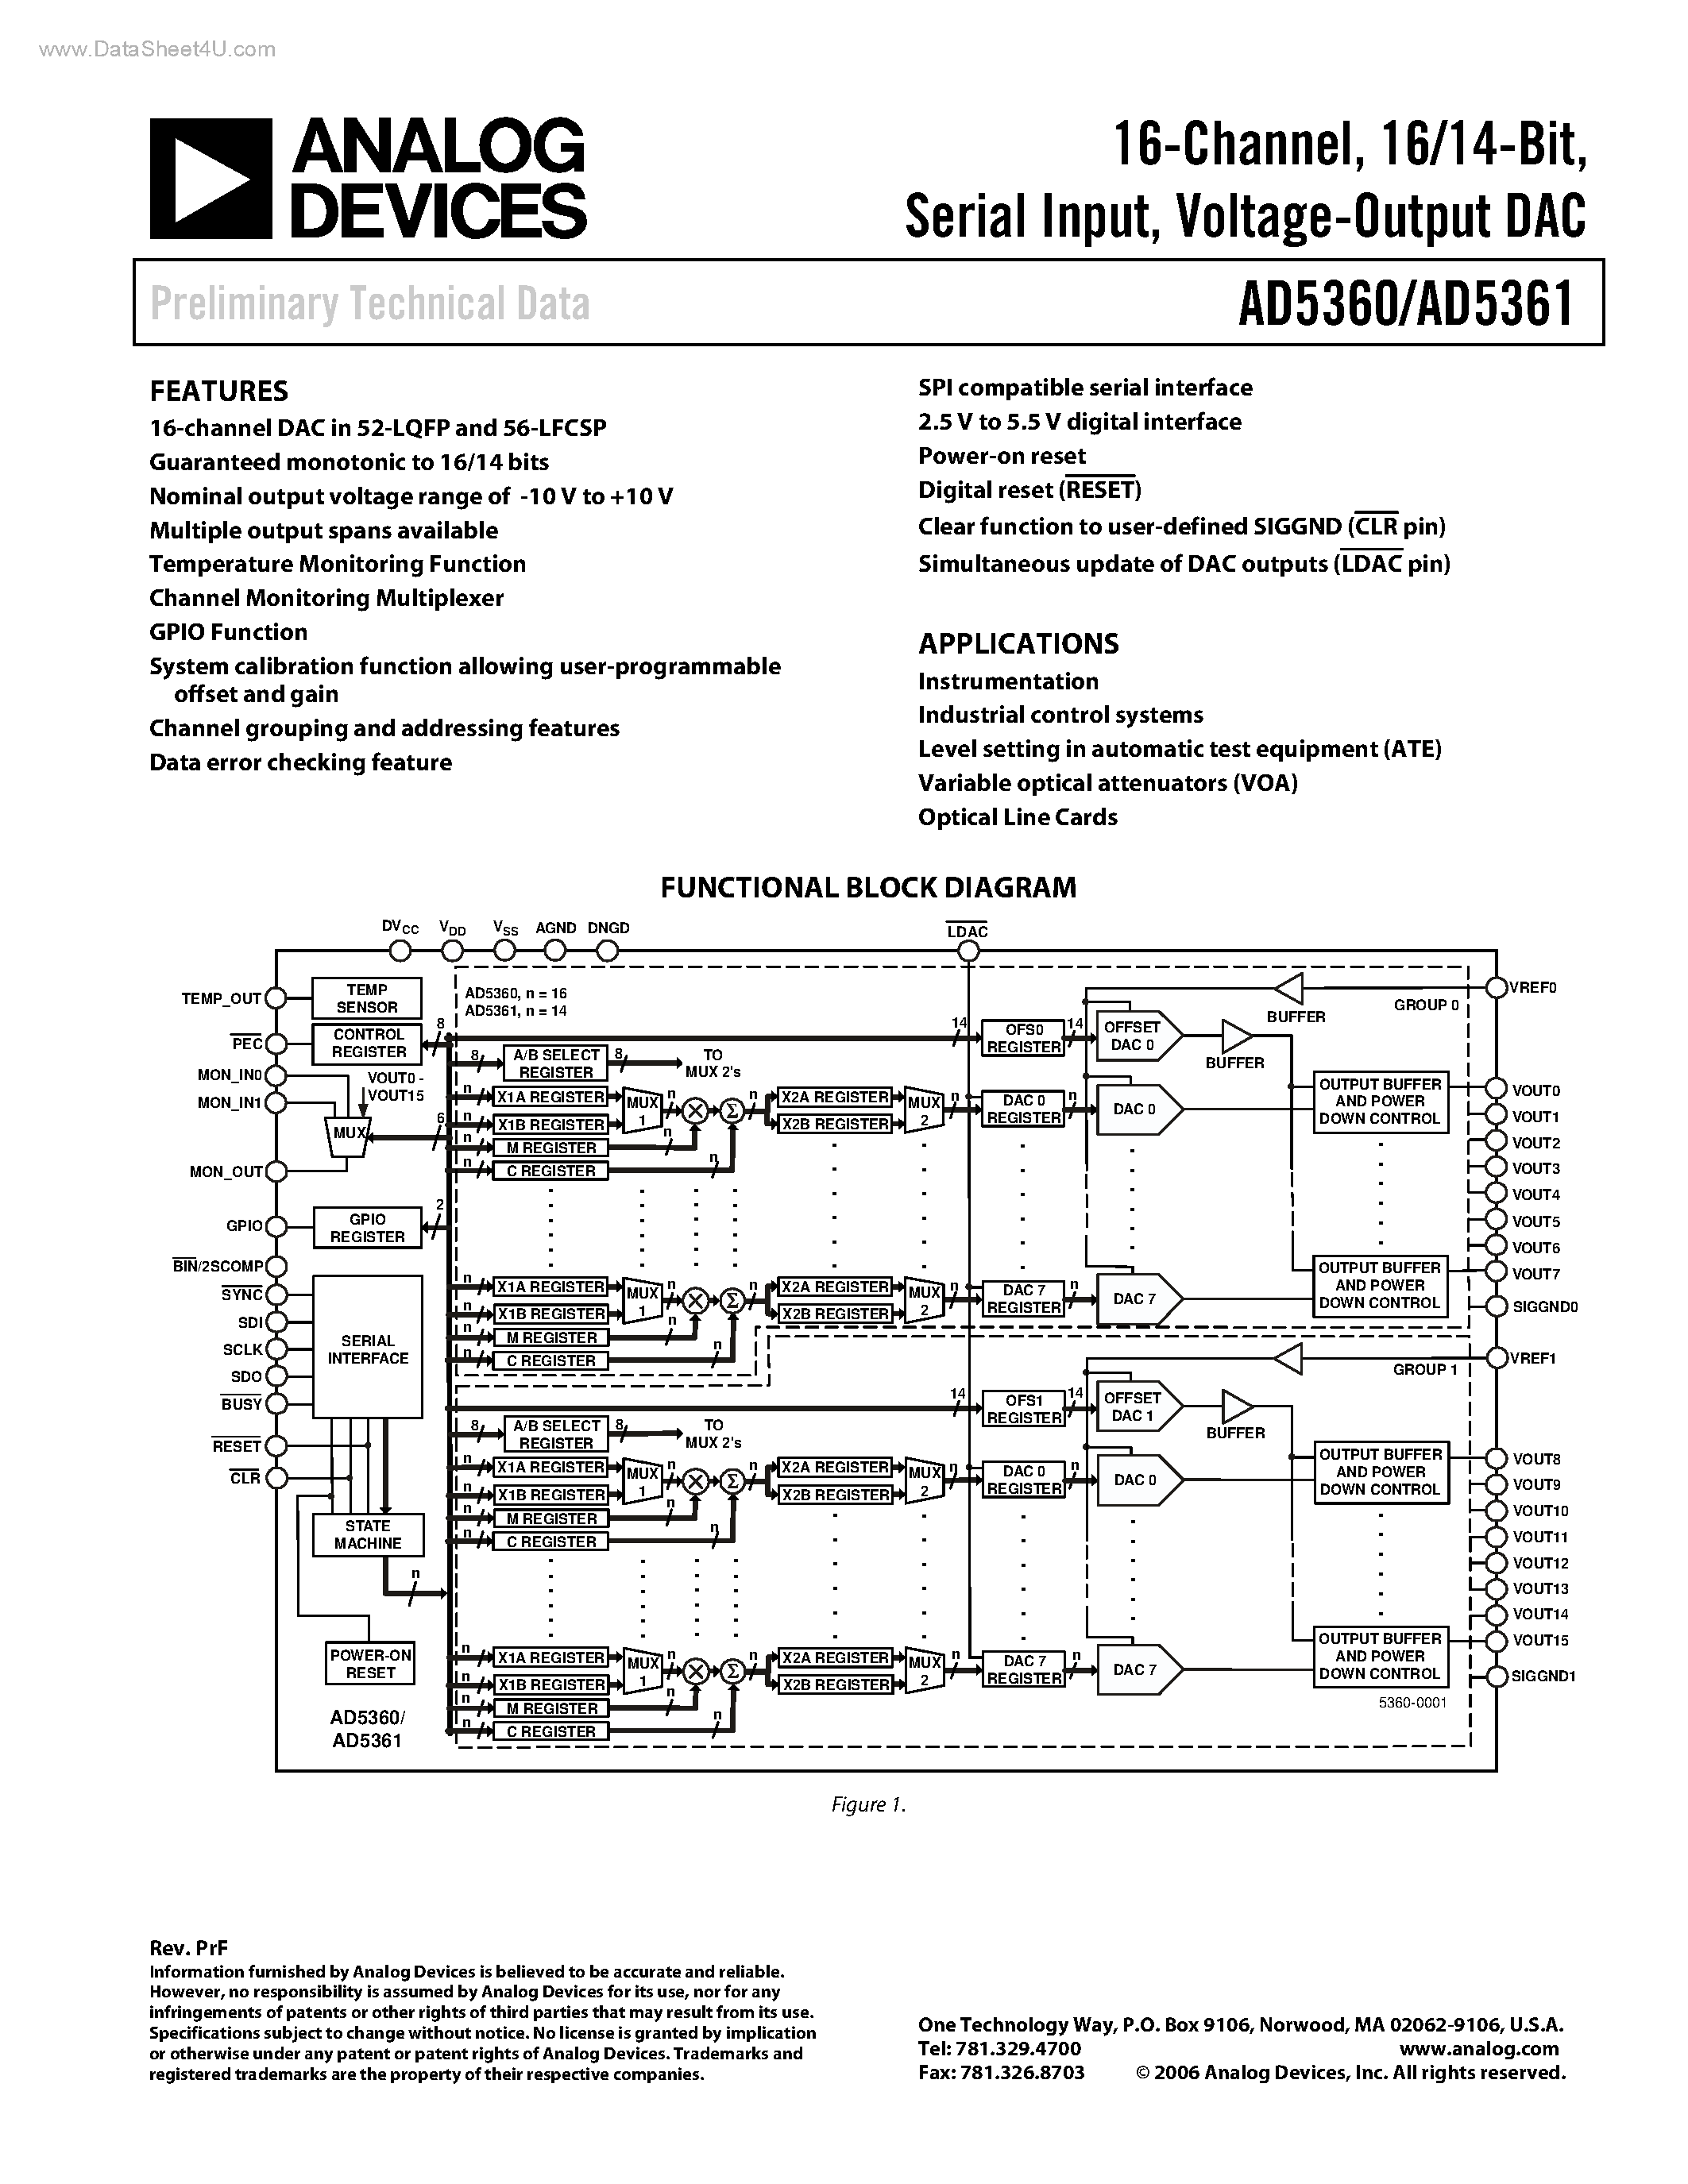 Даташит AD5360 - (AD5360 / AD5361) Voltage-Output DAC страница 1